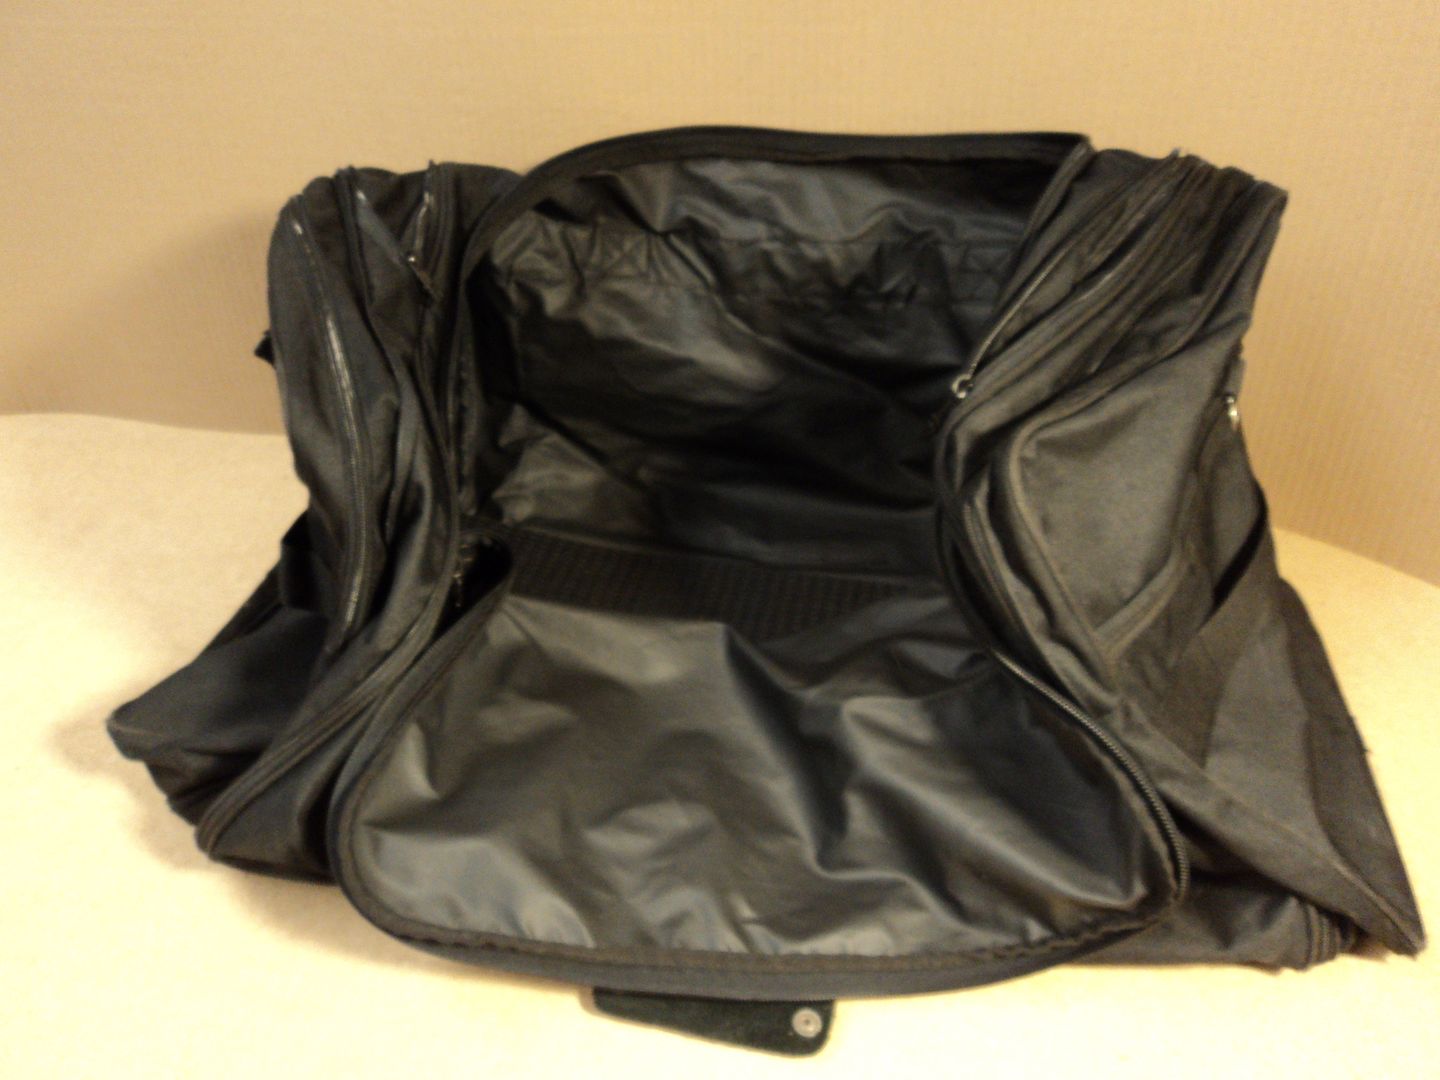 Standard Large Duffle Bag 12in w x 24in L x 14in H Black Canvas Nylon